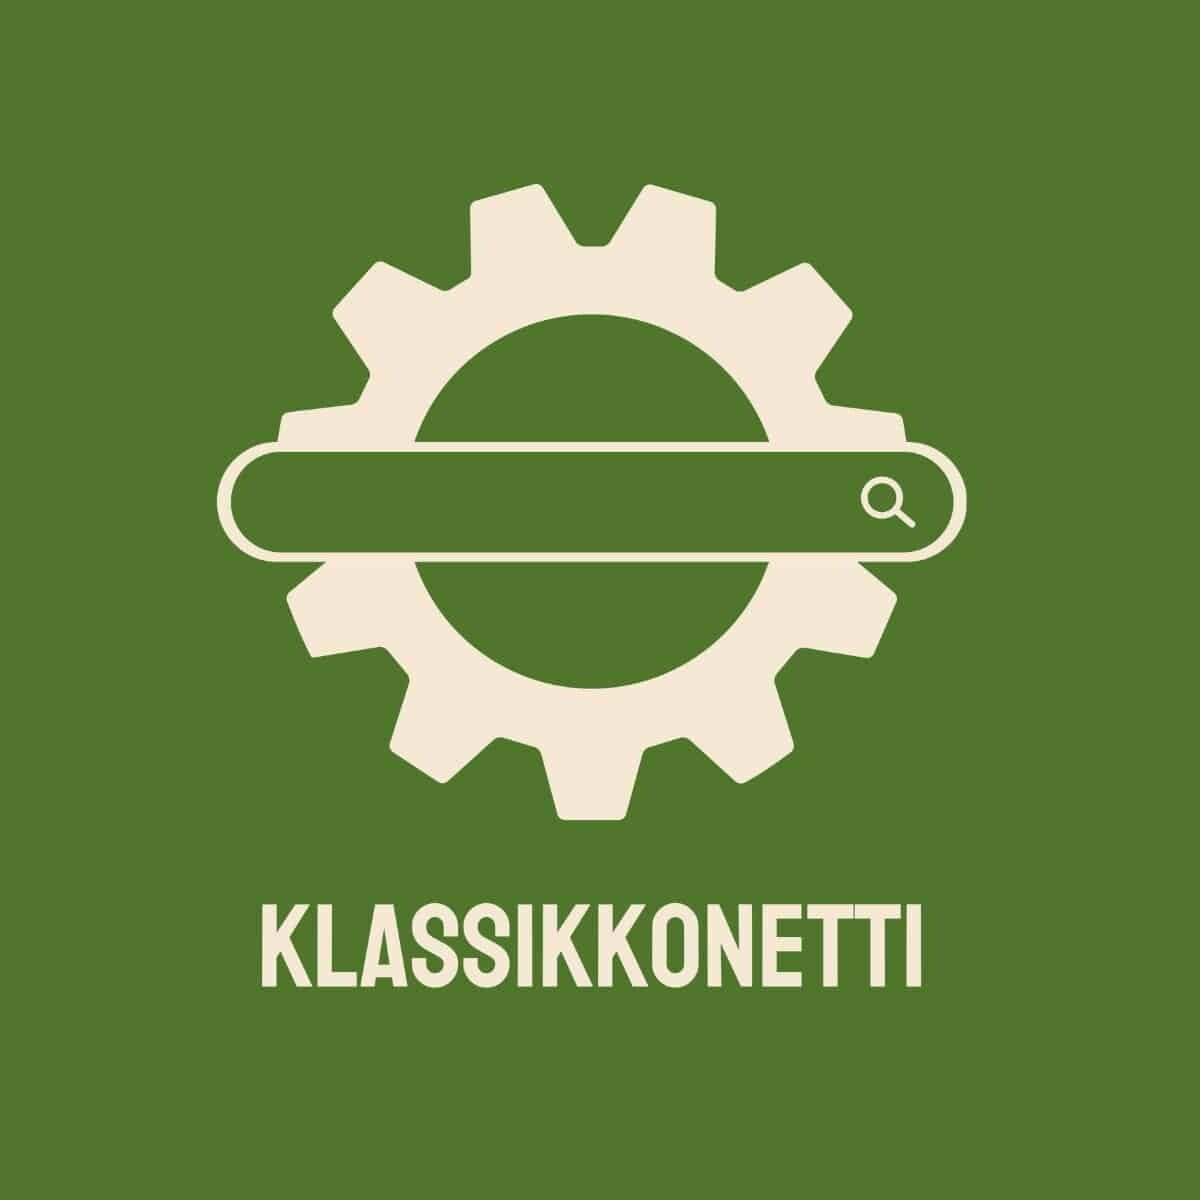 Klassikkonetti logo